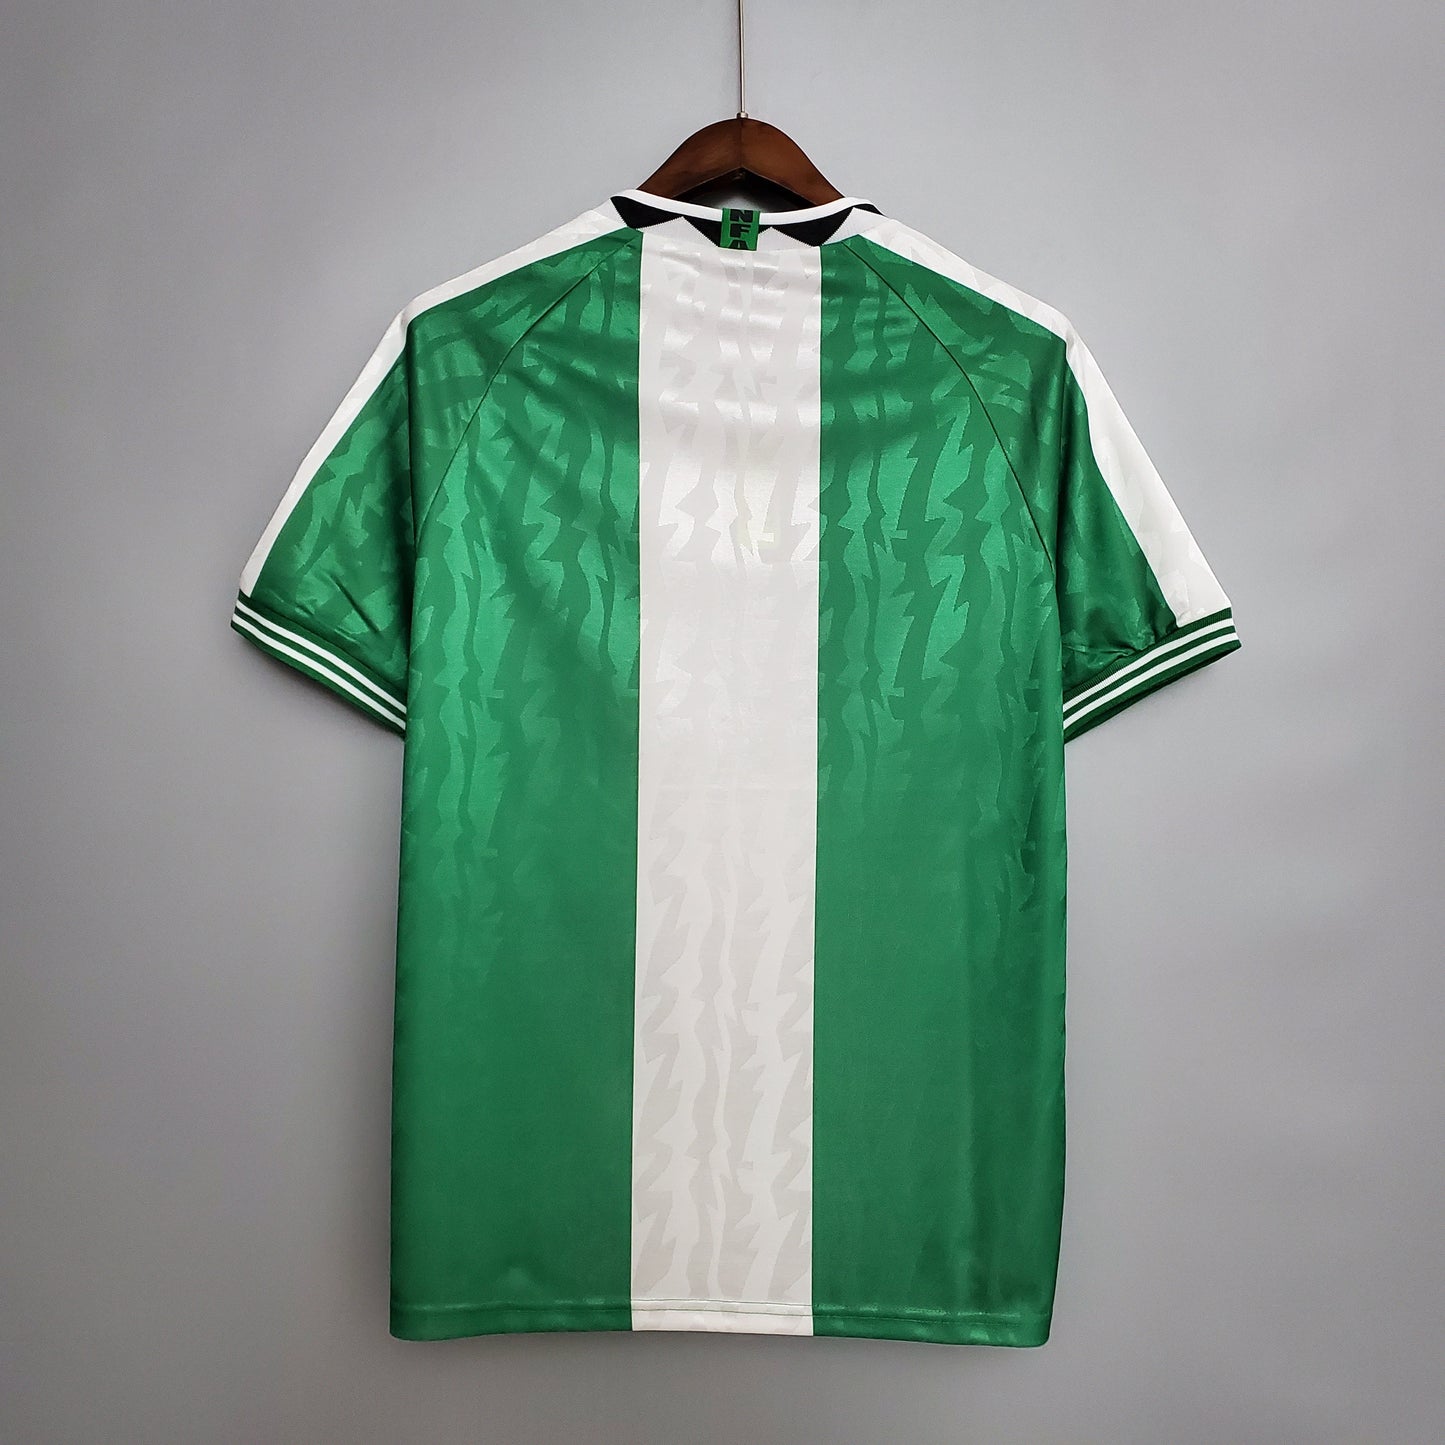 Retro Nigeria Home Kit 1996